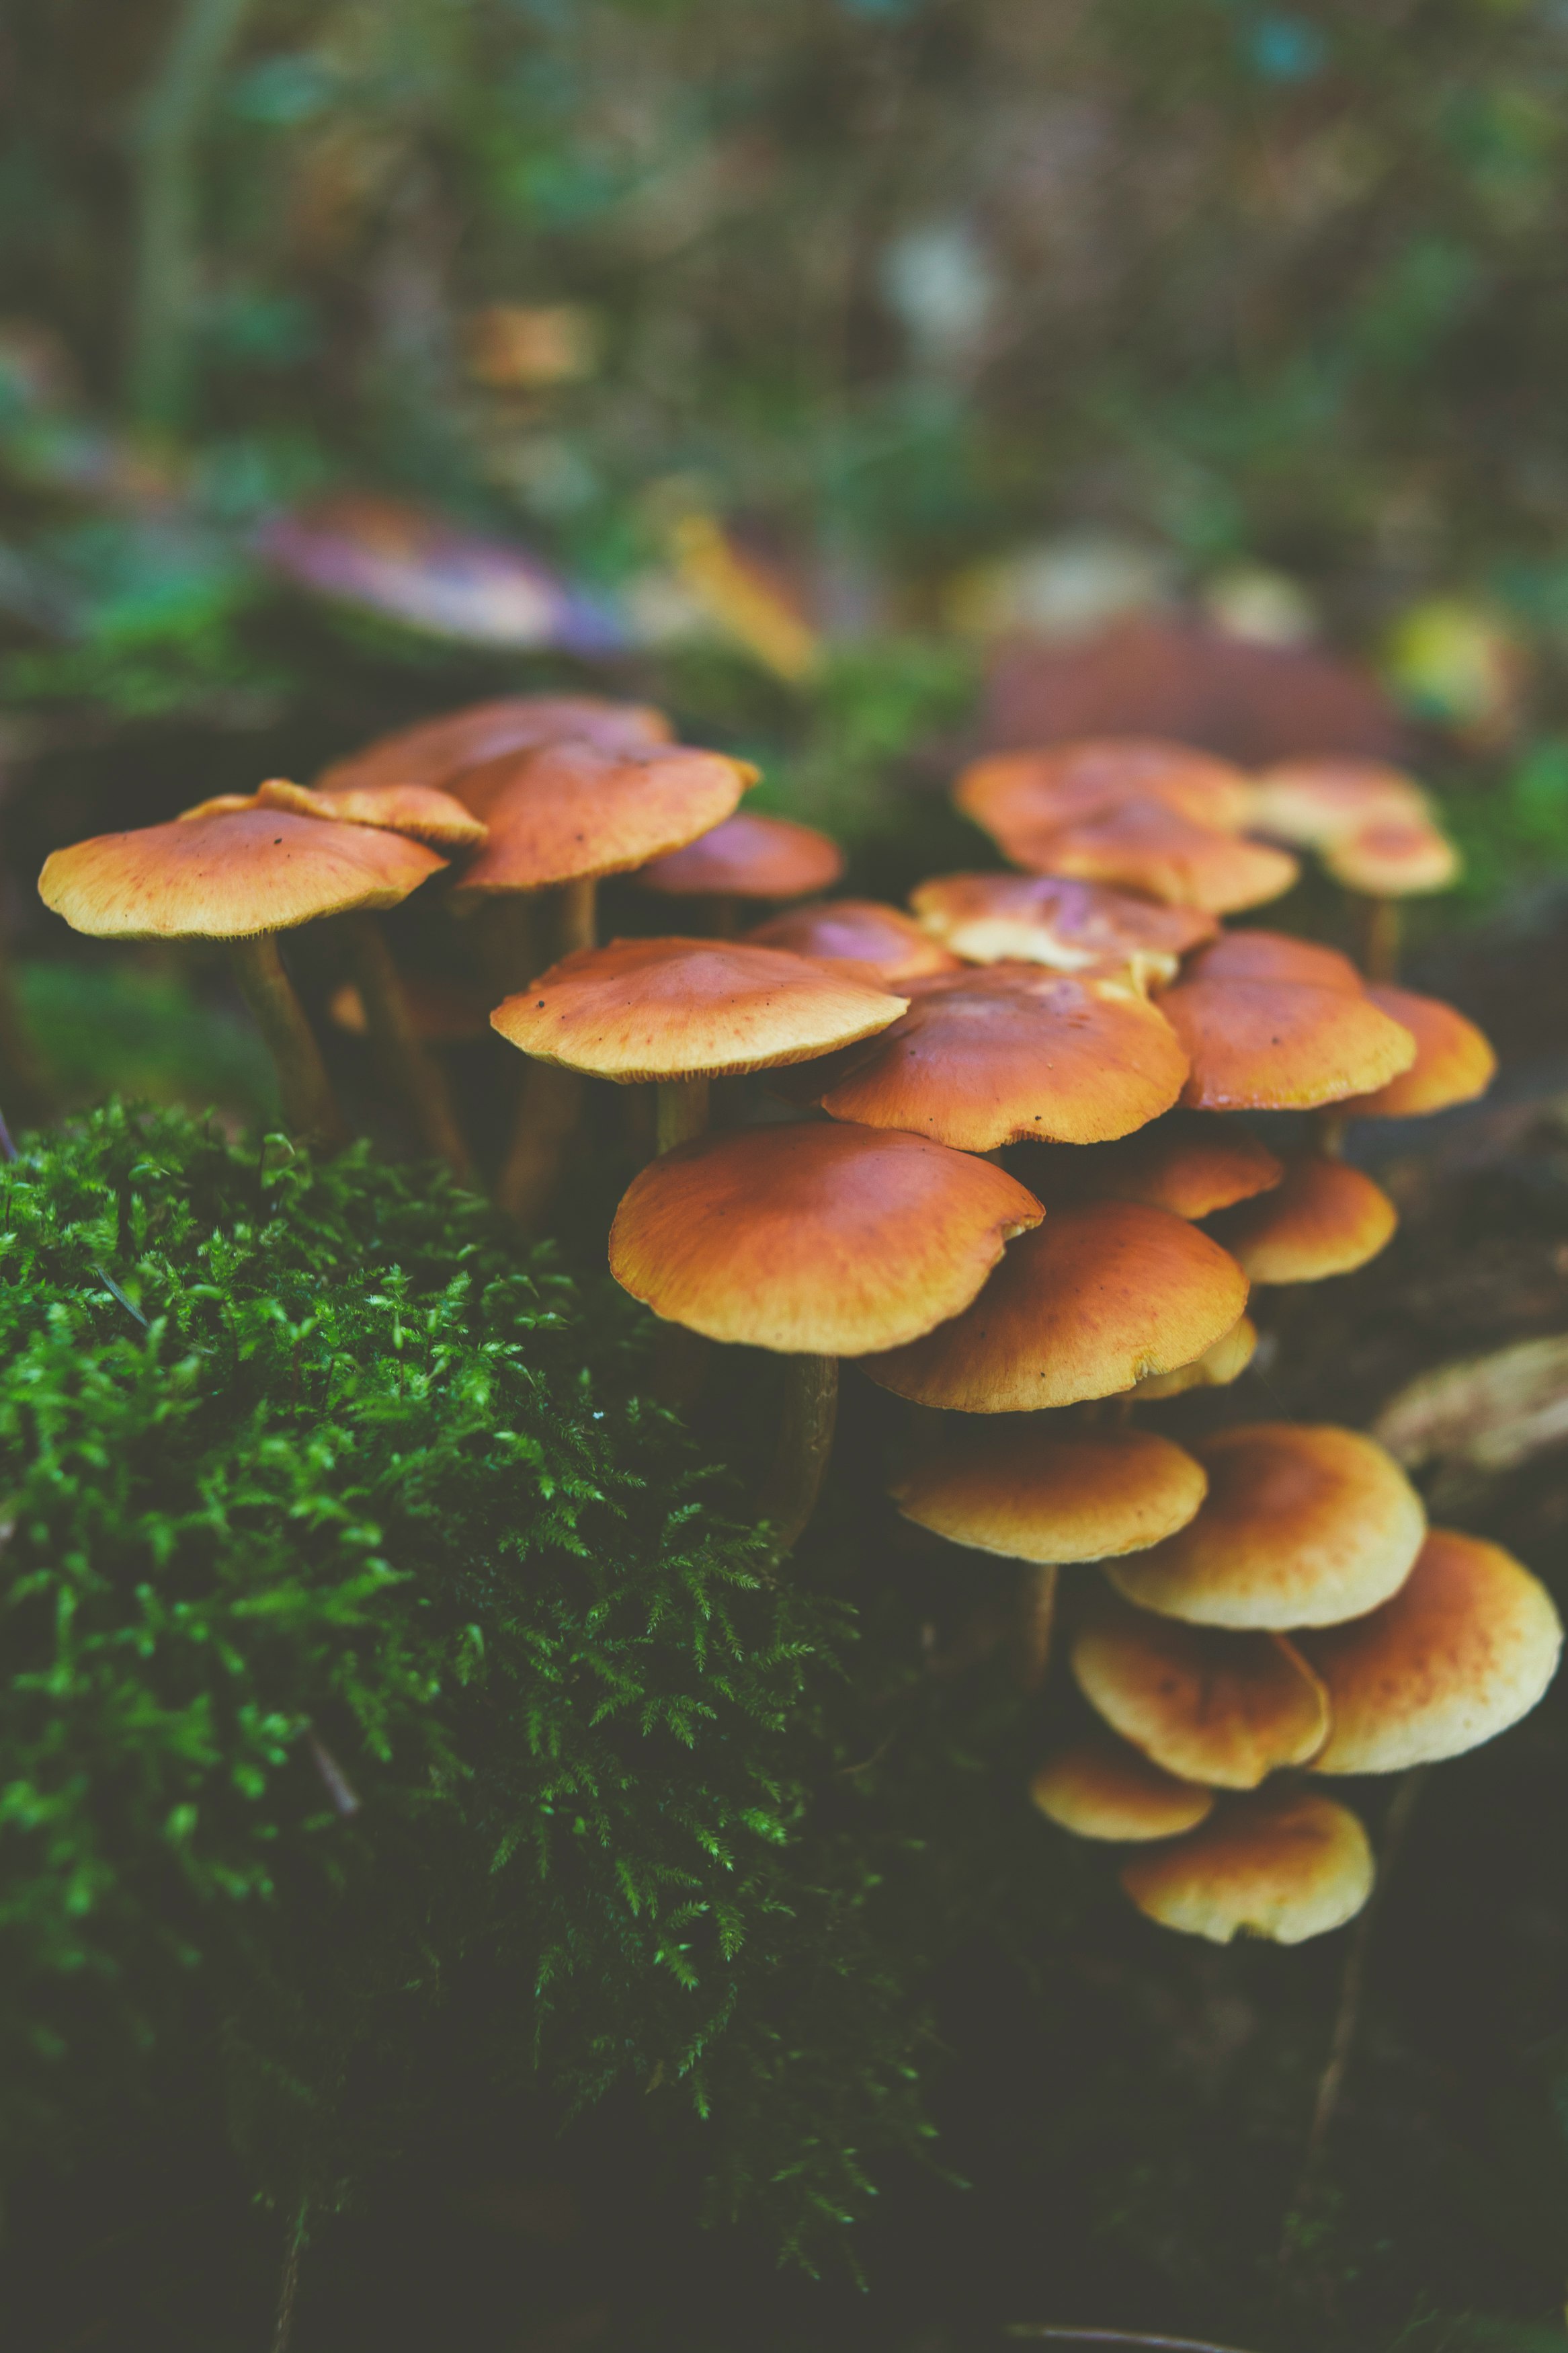 shallow focus photo of brown mushrooms